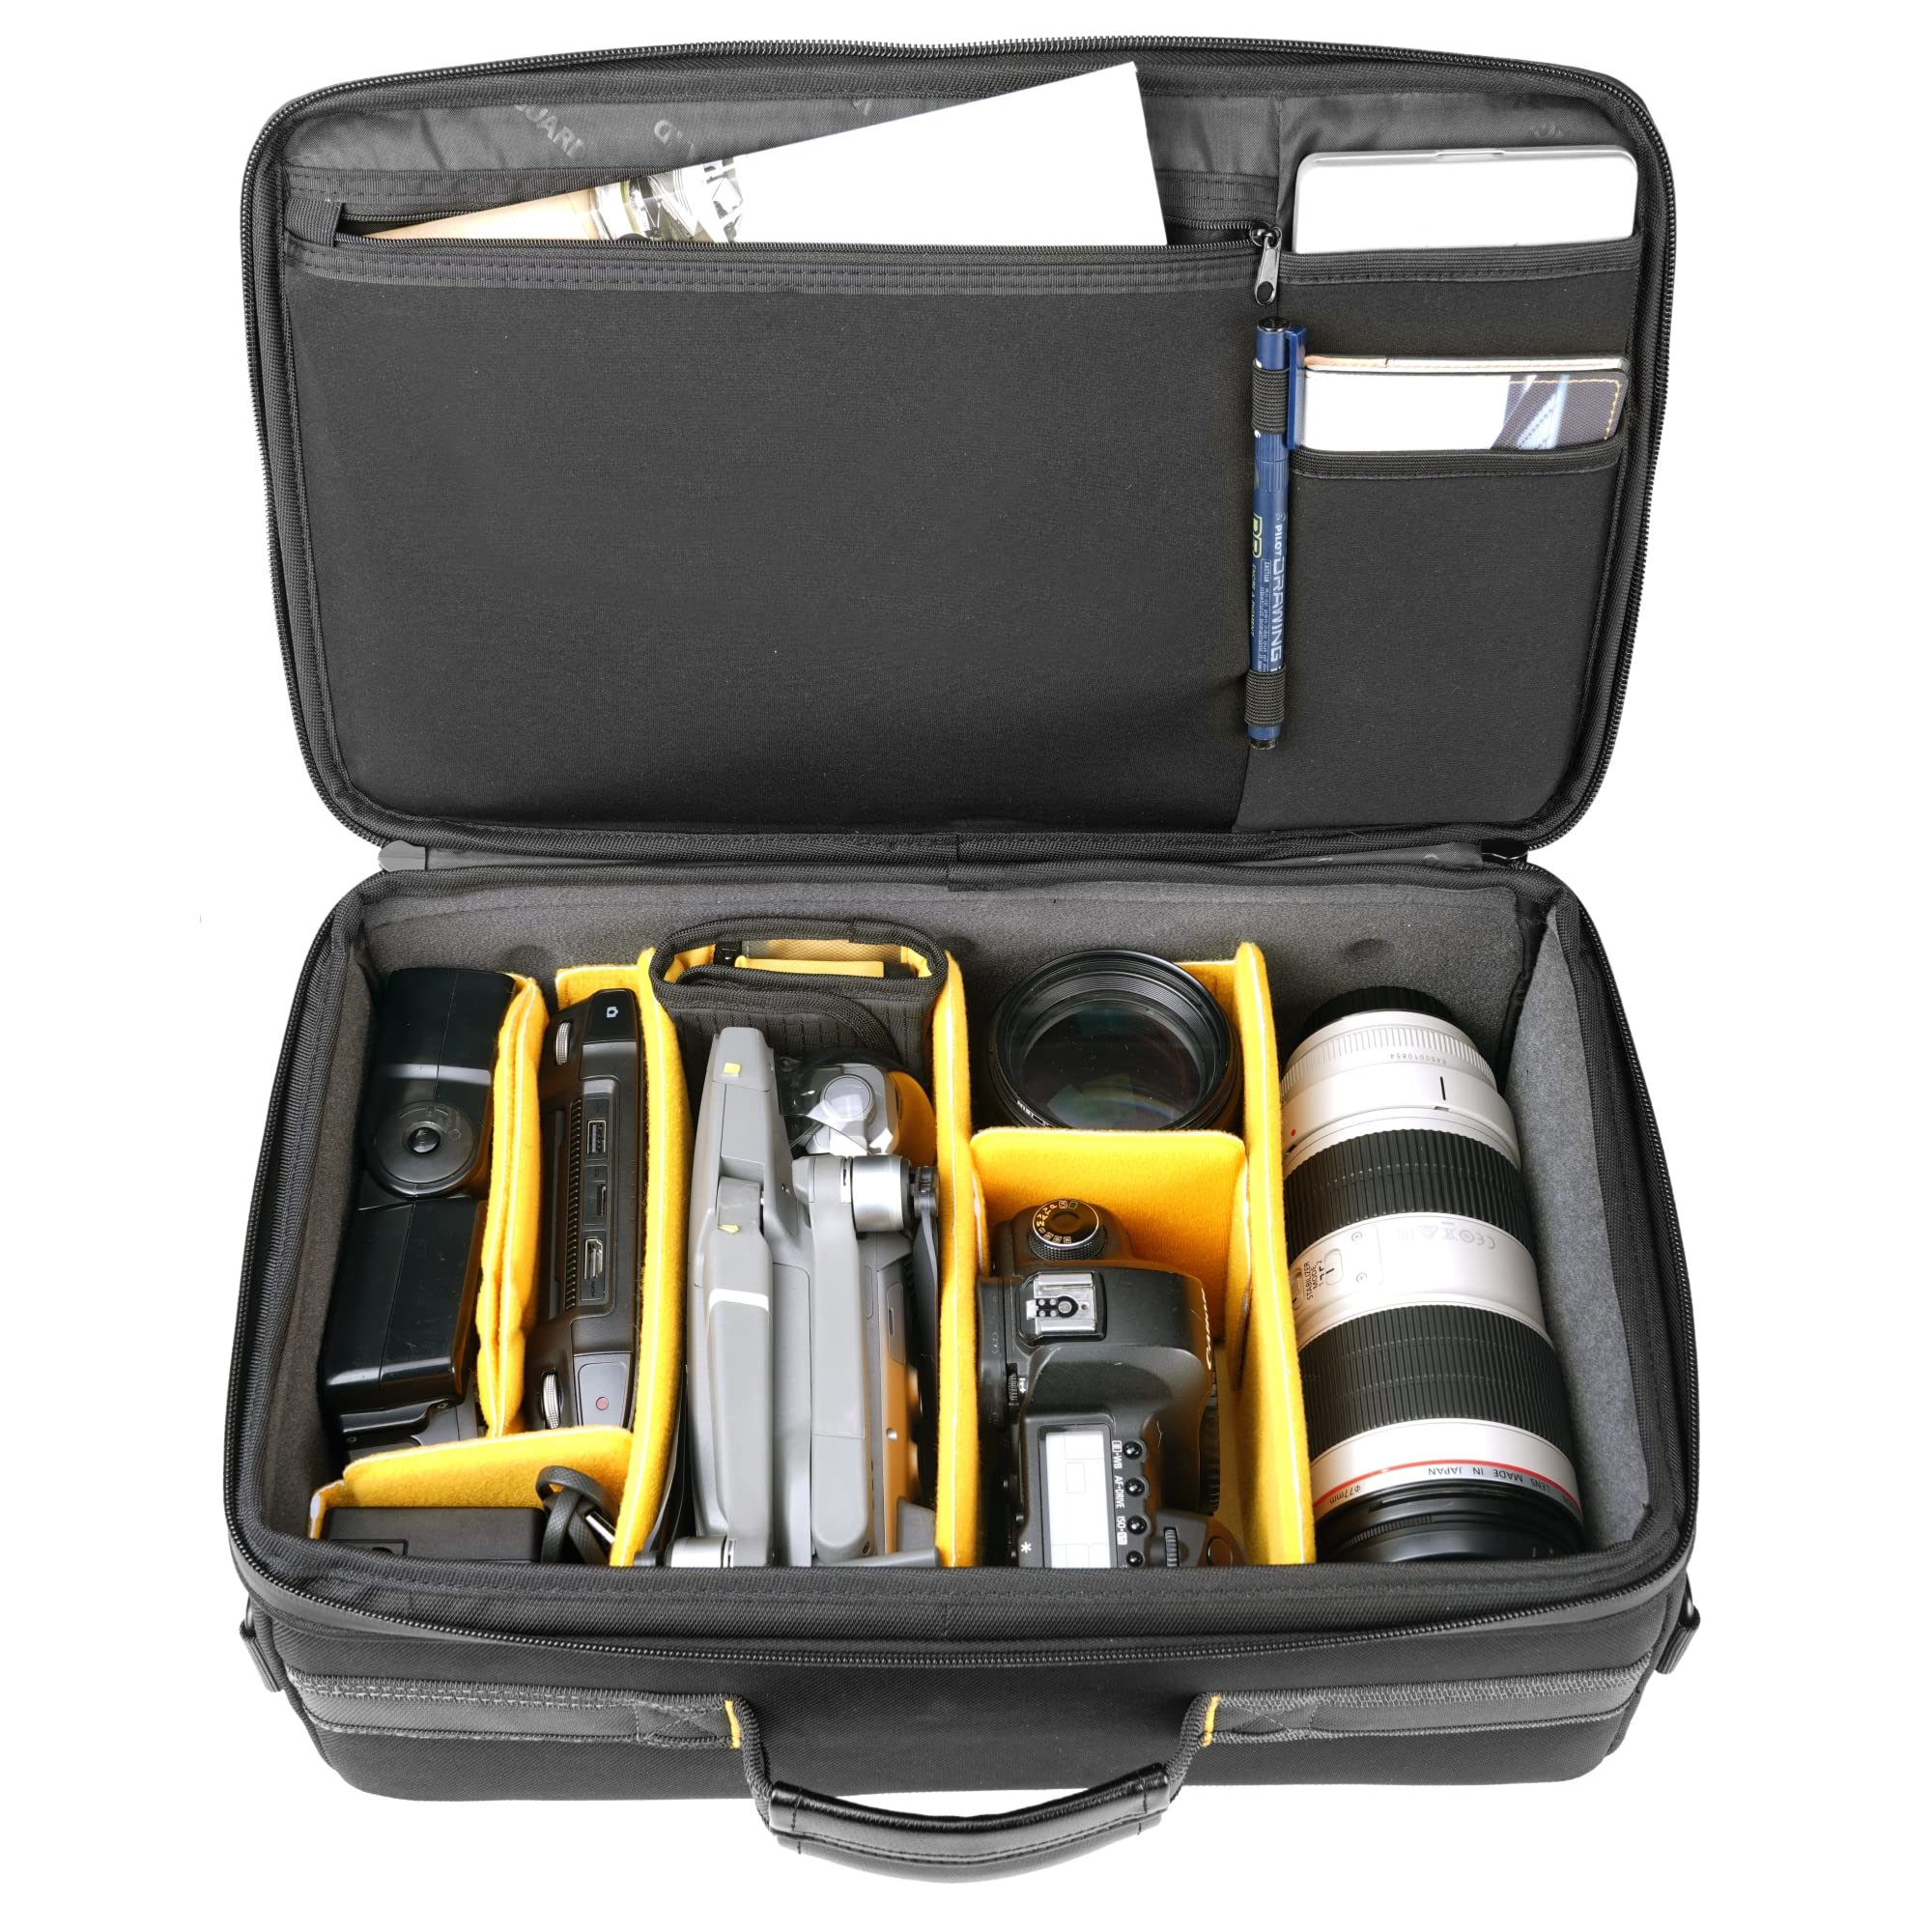 VANGUARD VEO BIB Divider S40 Customizeable Insert/Protection Bag for SLR DSLR Camera, Lenses, Accessories